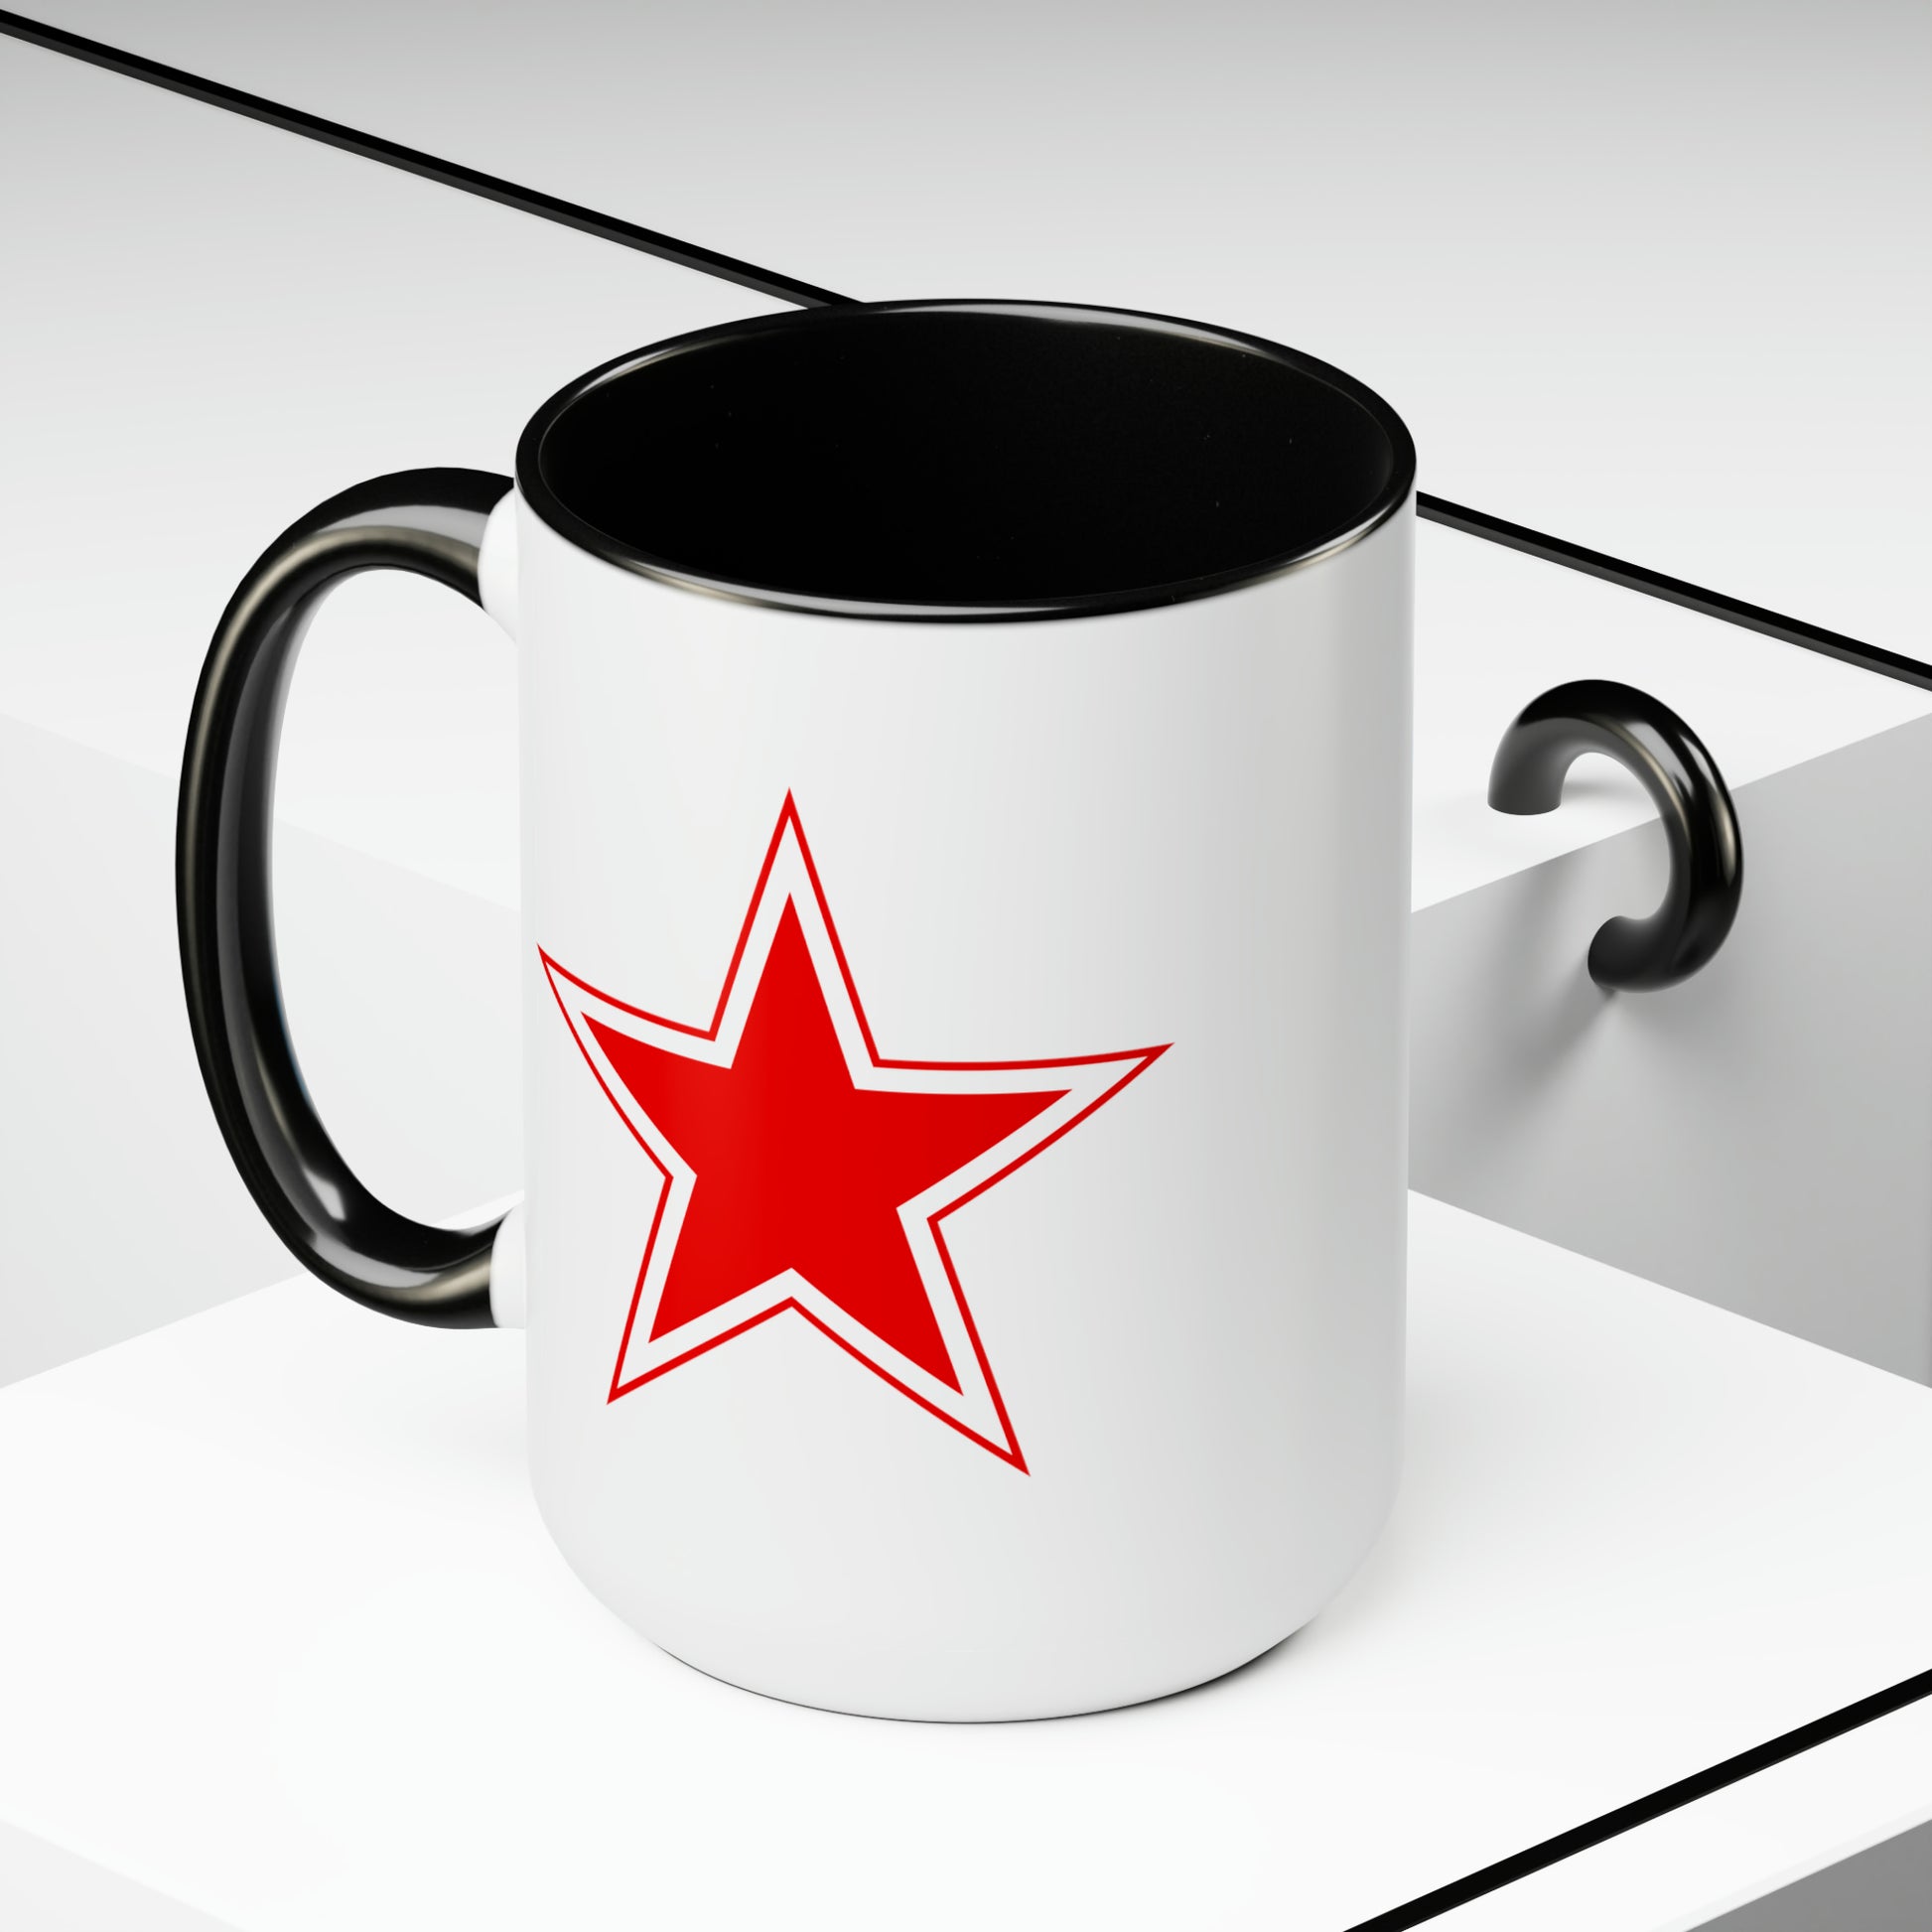 Soviet Union Air Force Roundel Coffee Mug - Double Sided Black Accent Ceramic 15oz - by TheGlassyLass.com